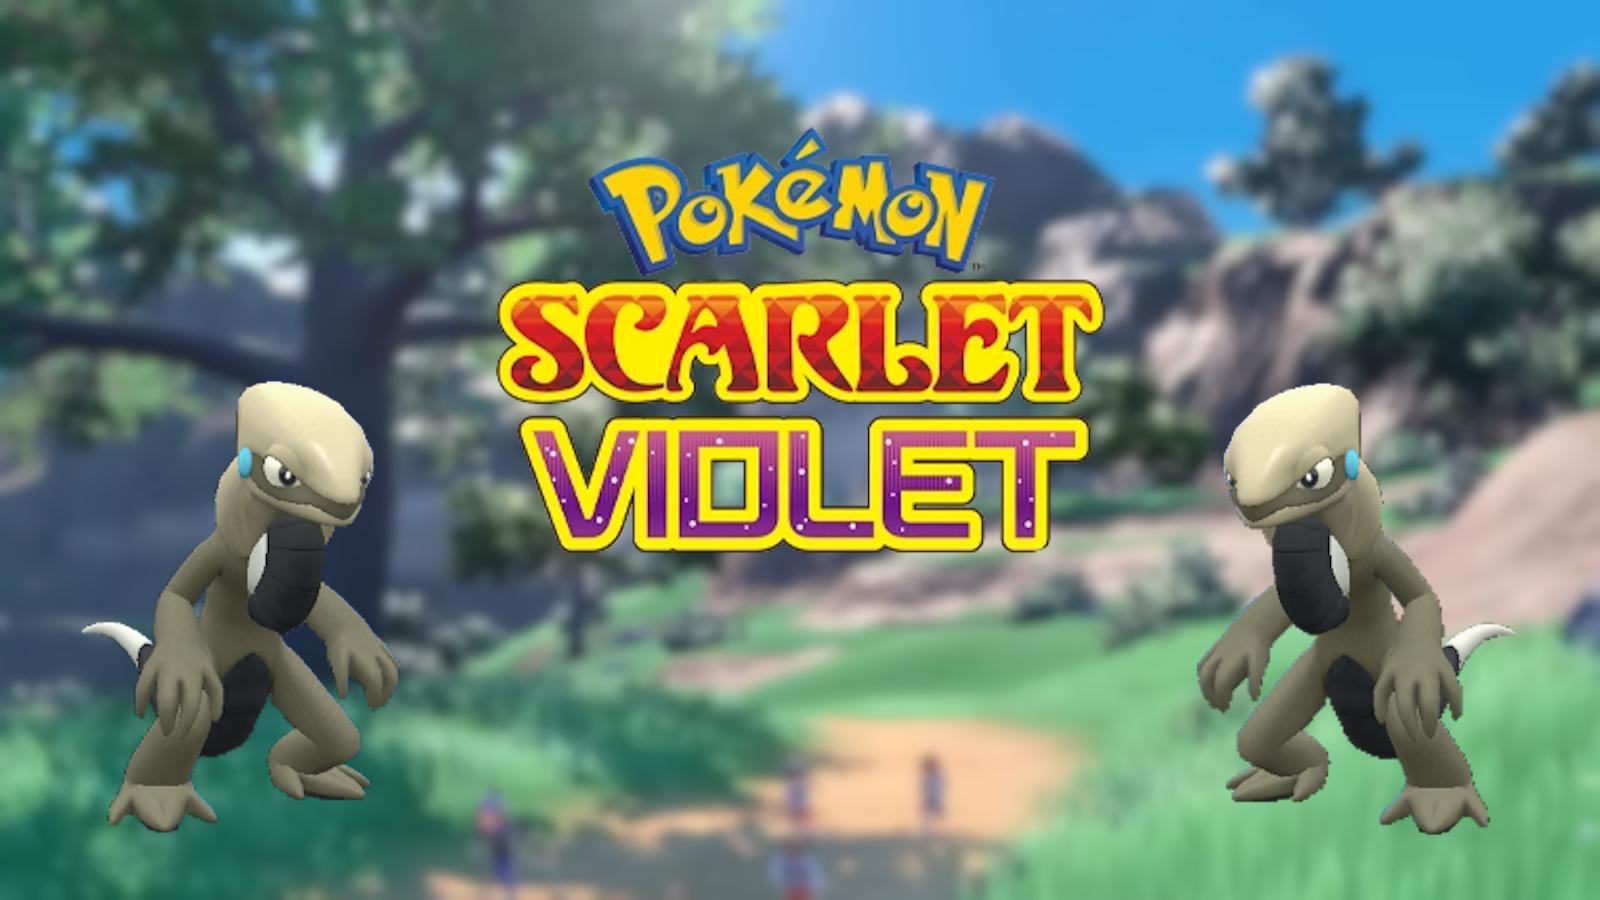 Two Shiny Cyclizar next to Pokemon Scarlet & Violet logo.